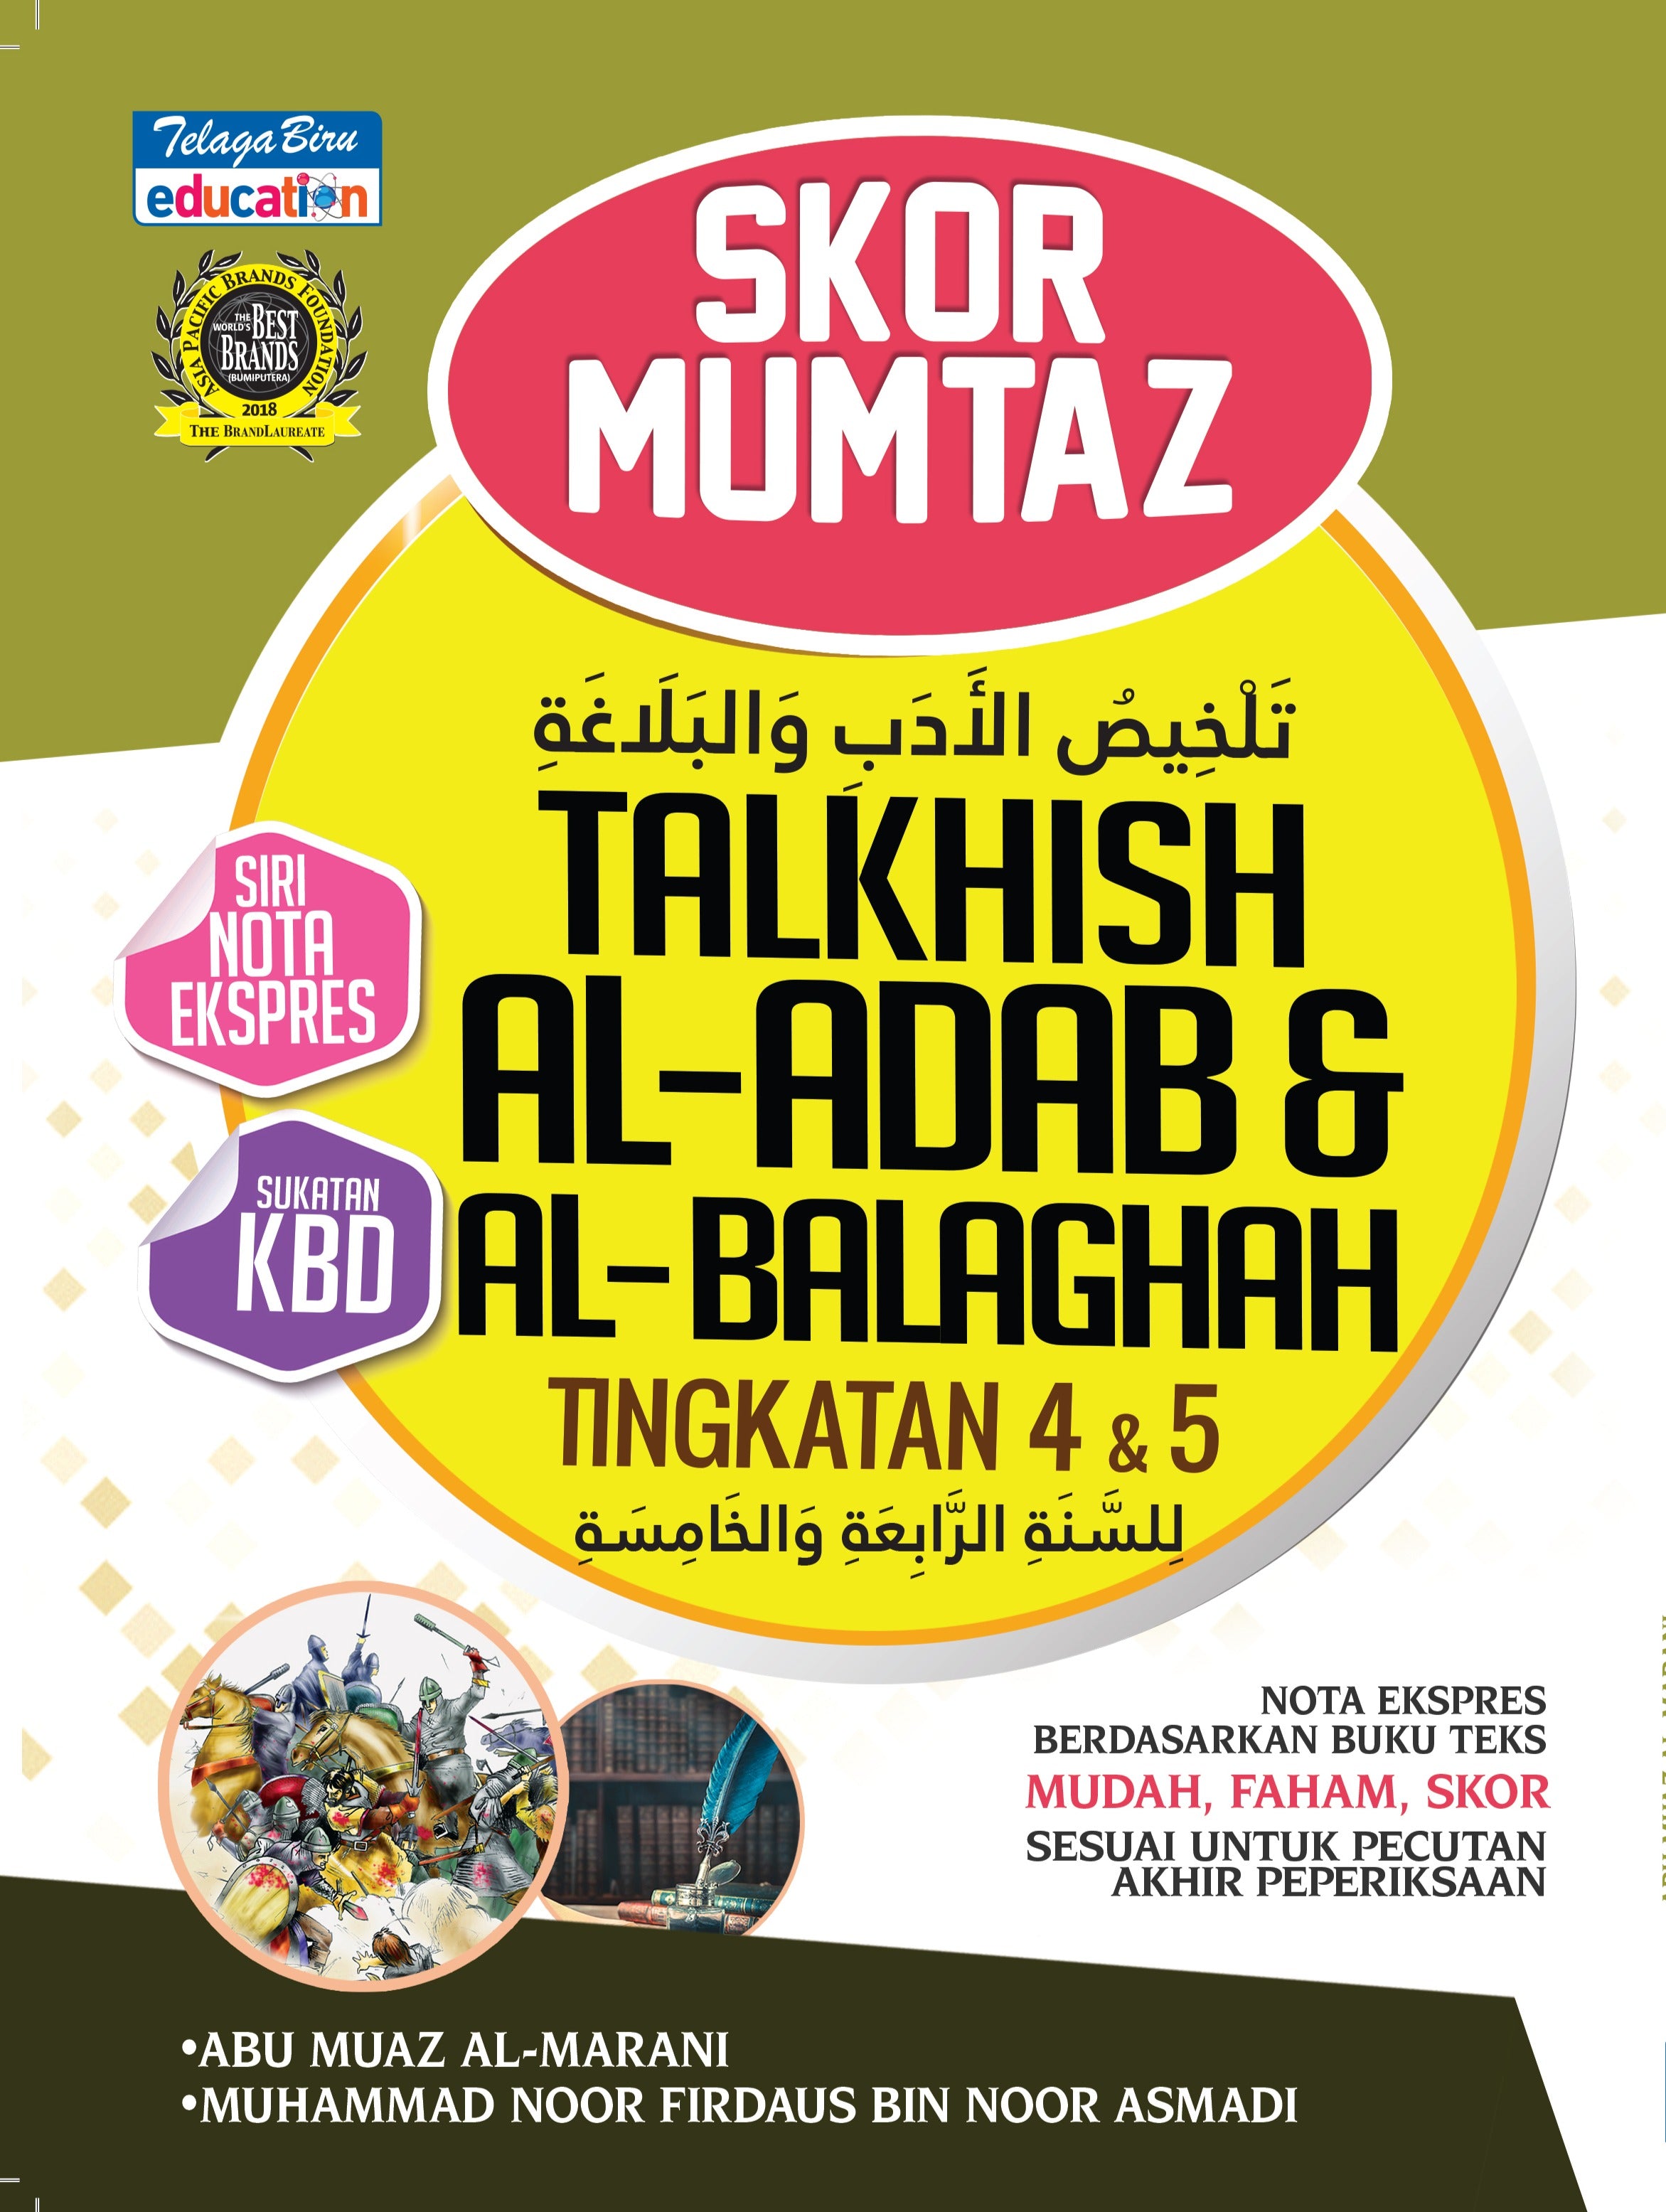 Skor Mumtaz Talkhish Al-Adab & Al-Balaghah Tingkatan 4&5 - (TBBS1179)